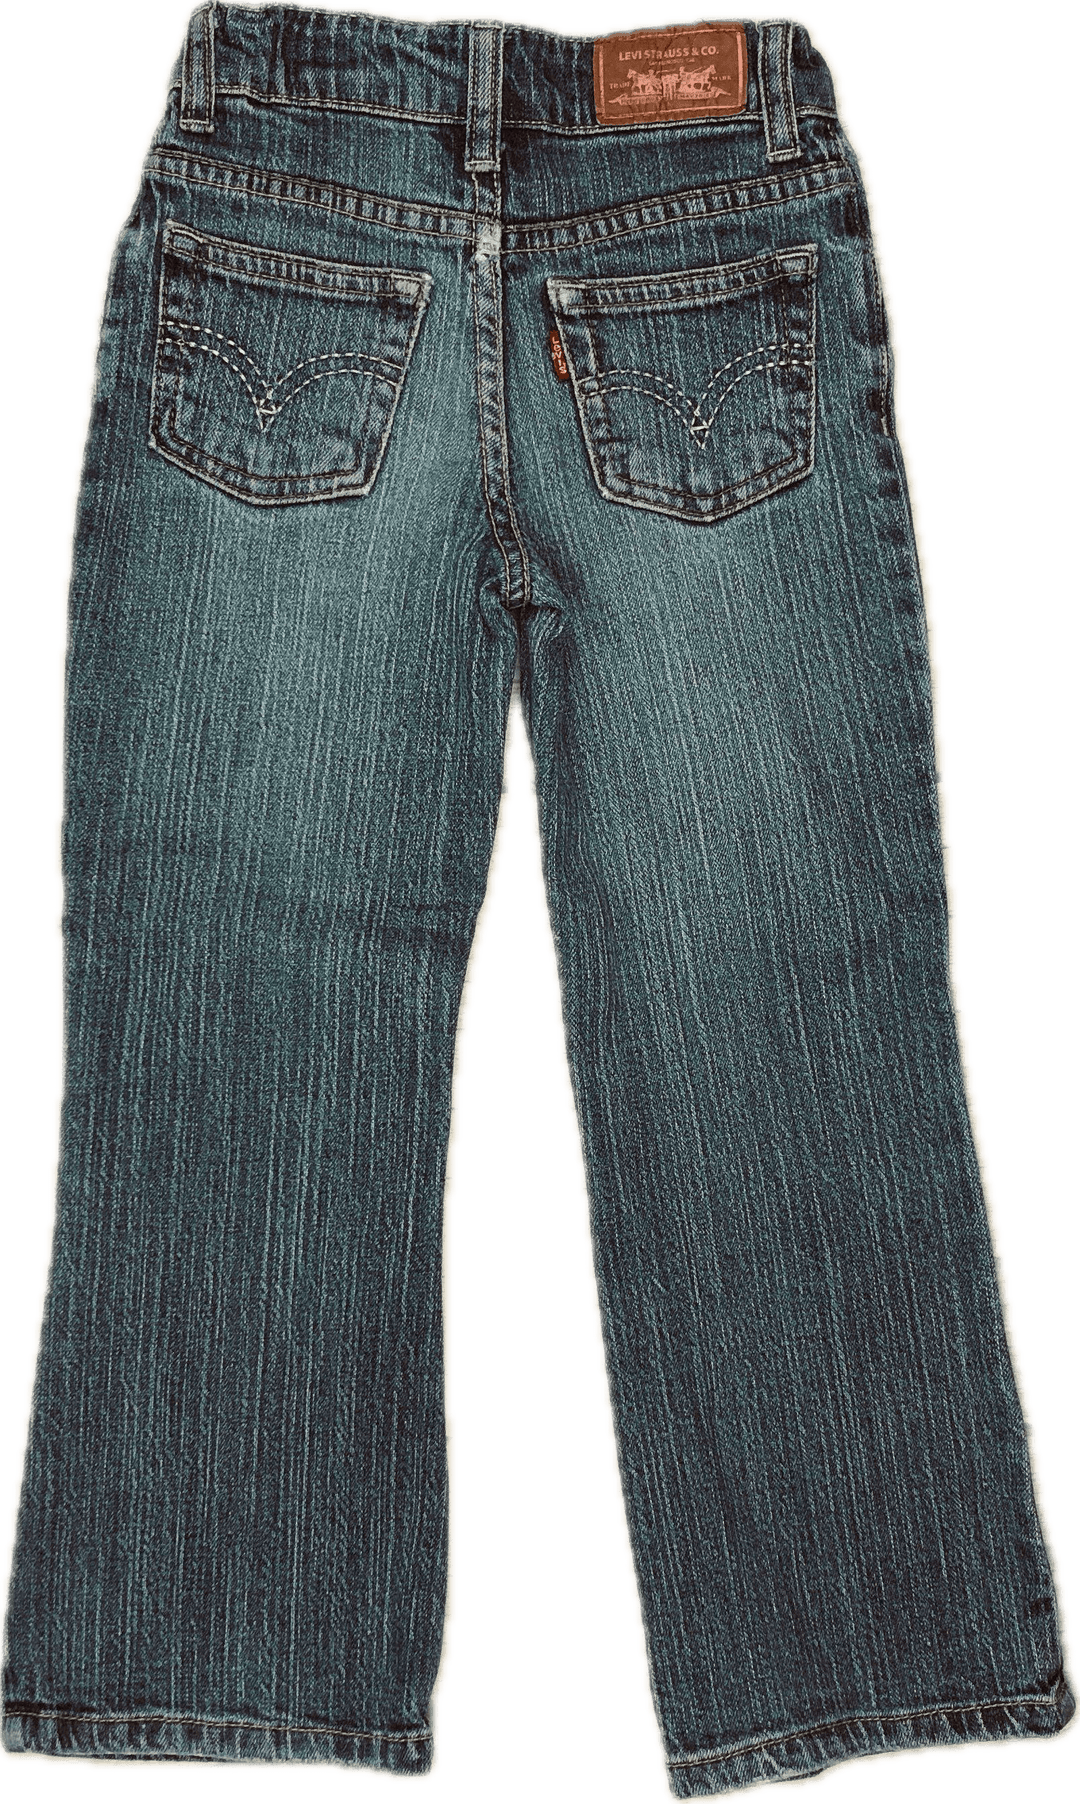 Levis 517 Flare Girls Stretch Jeans - Size 6 - Jean Pool